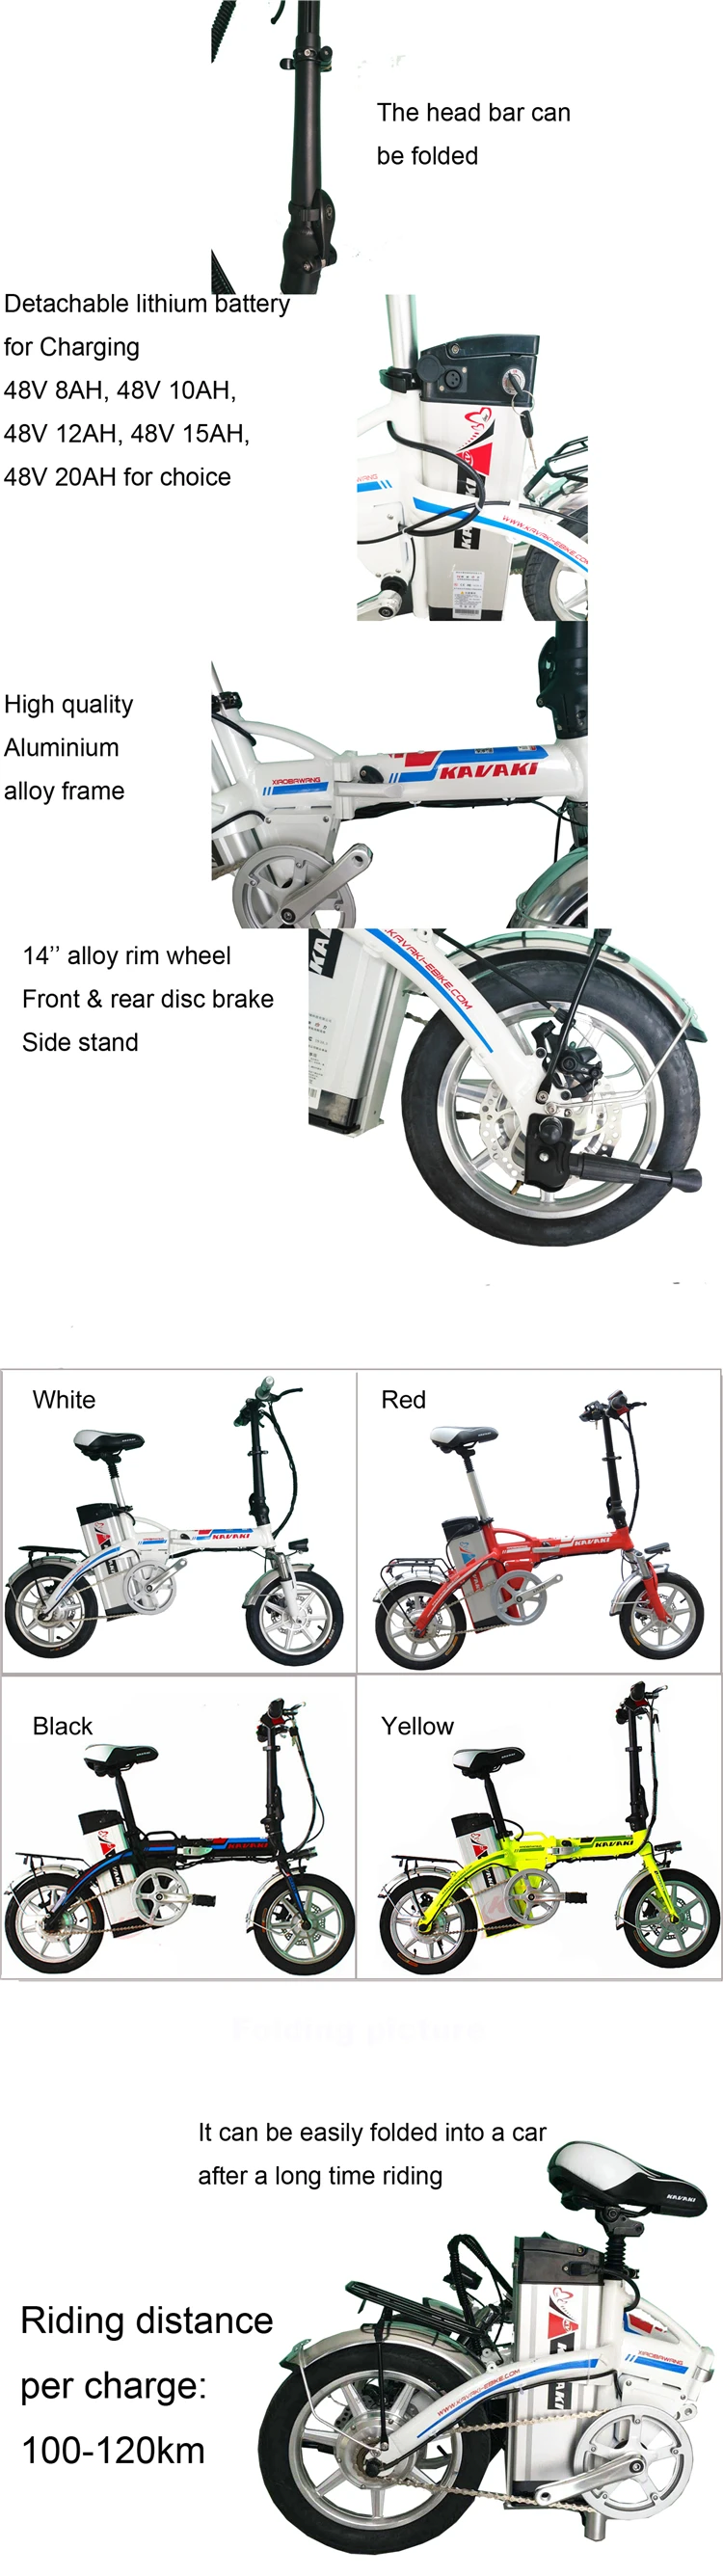 small charging bike